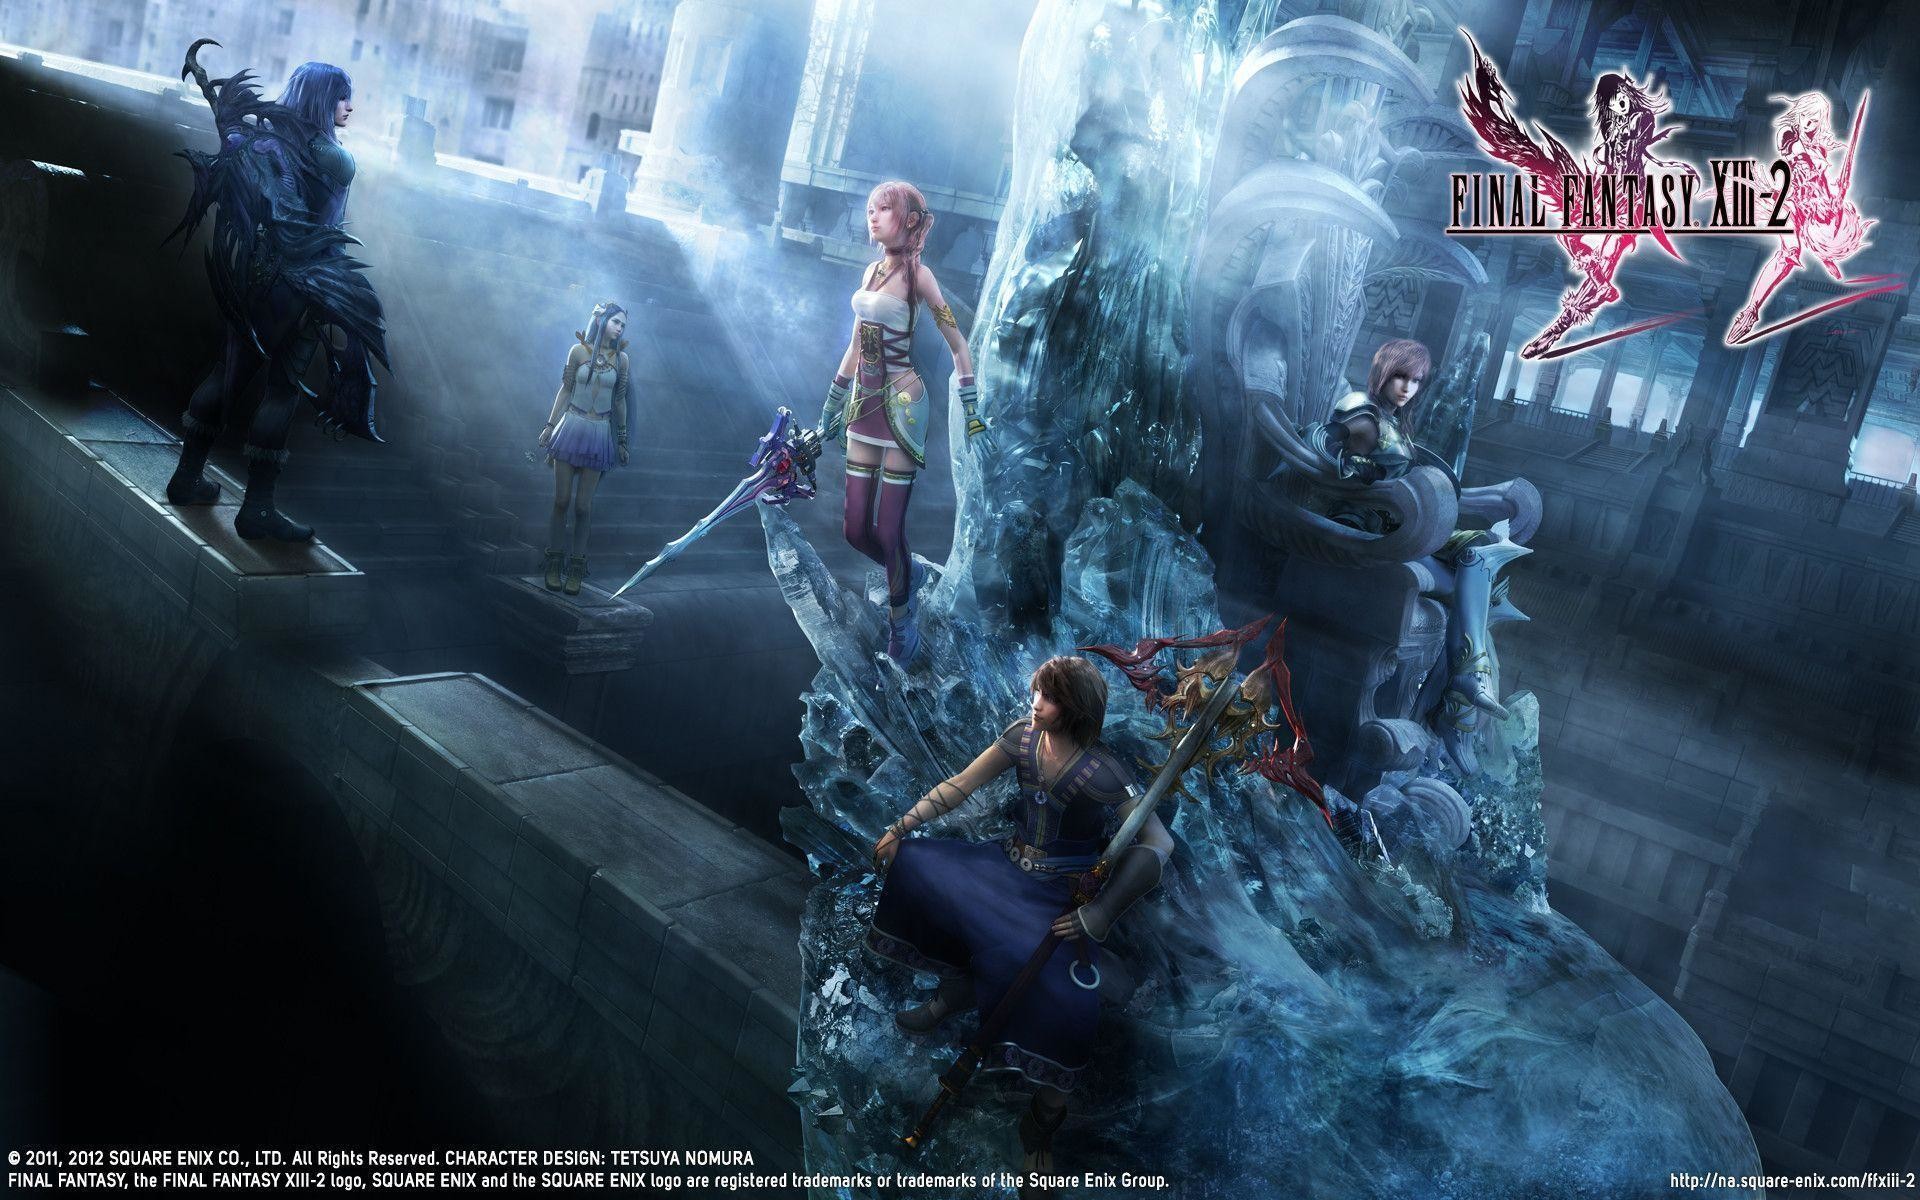  Final Fantasy  13 2  Wallpaper    WallpaperTag